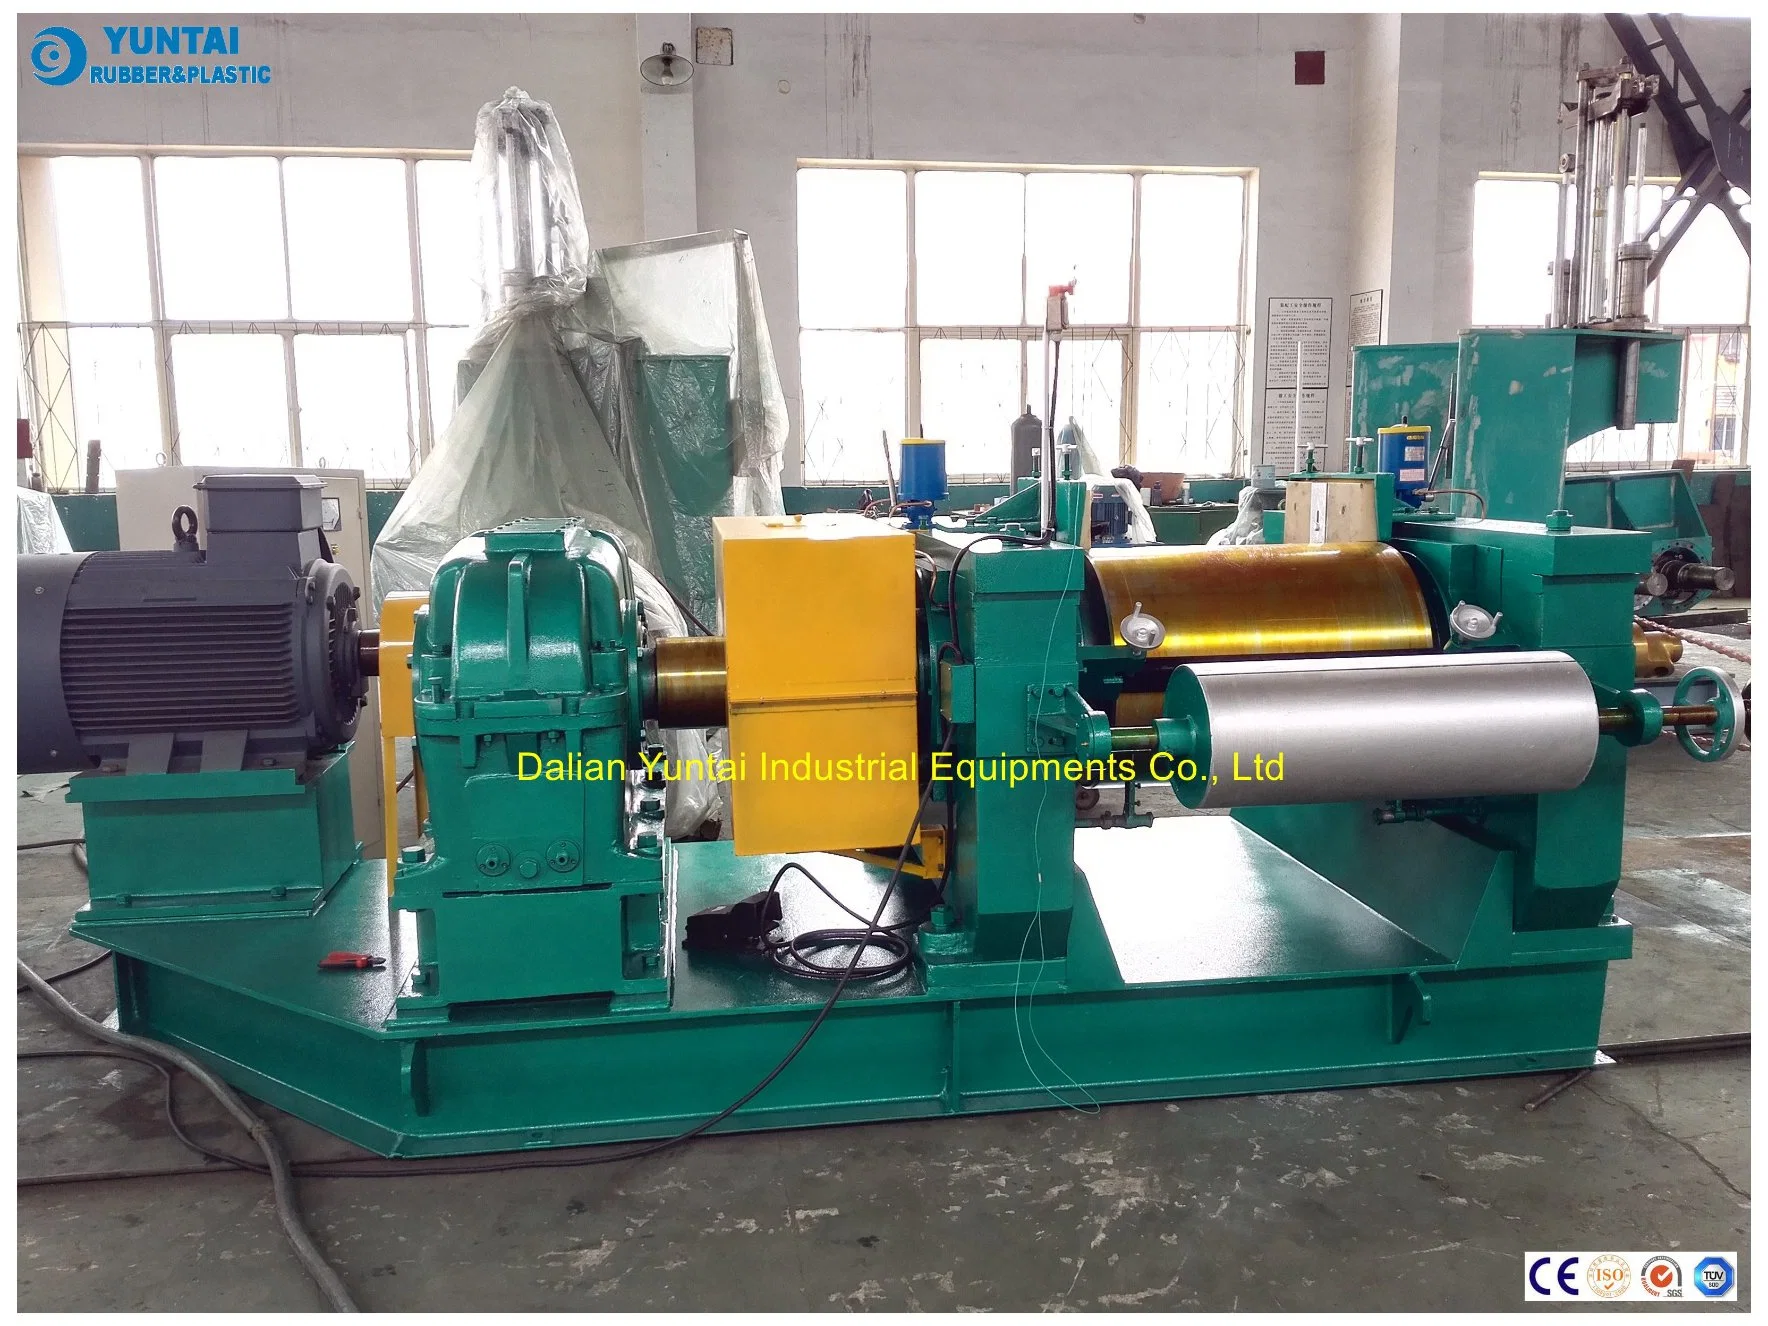 Xkj-480 Bearing Rolls Rubber Refining Machine for Reclaimed Rubber Processing